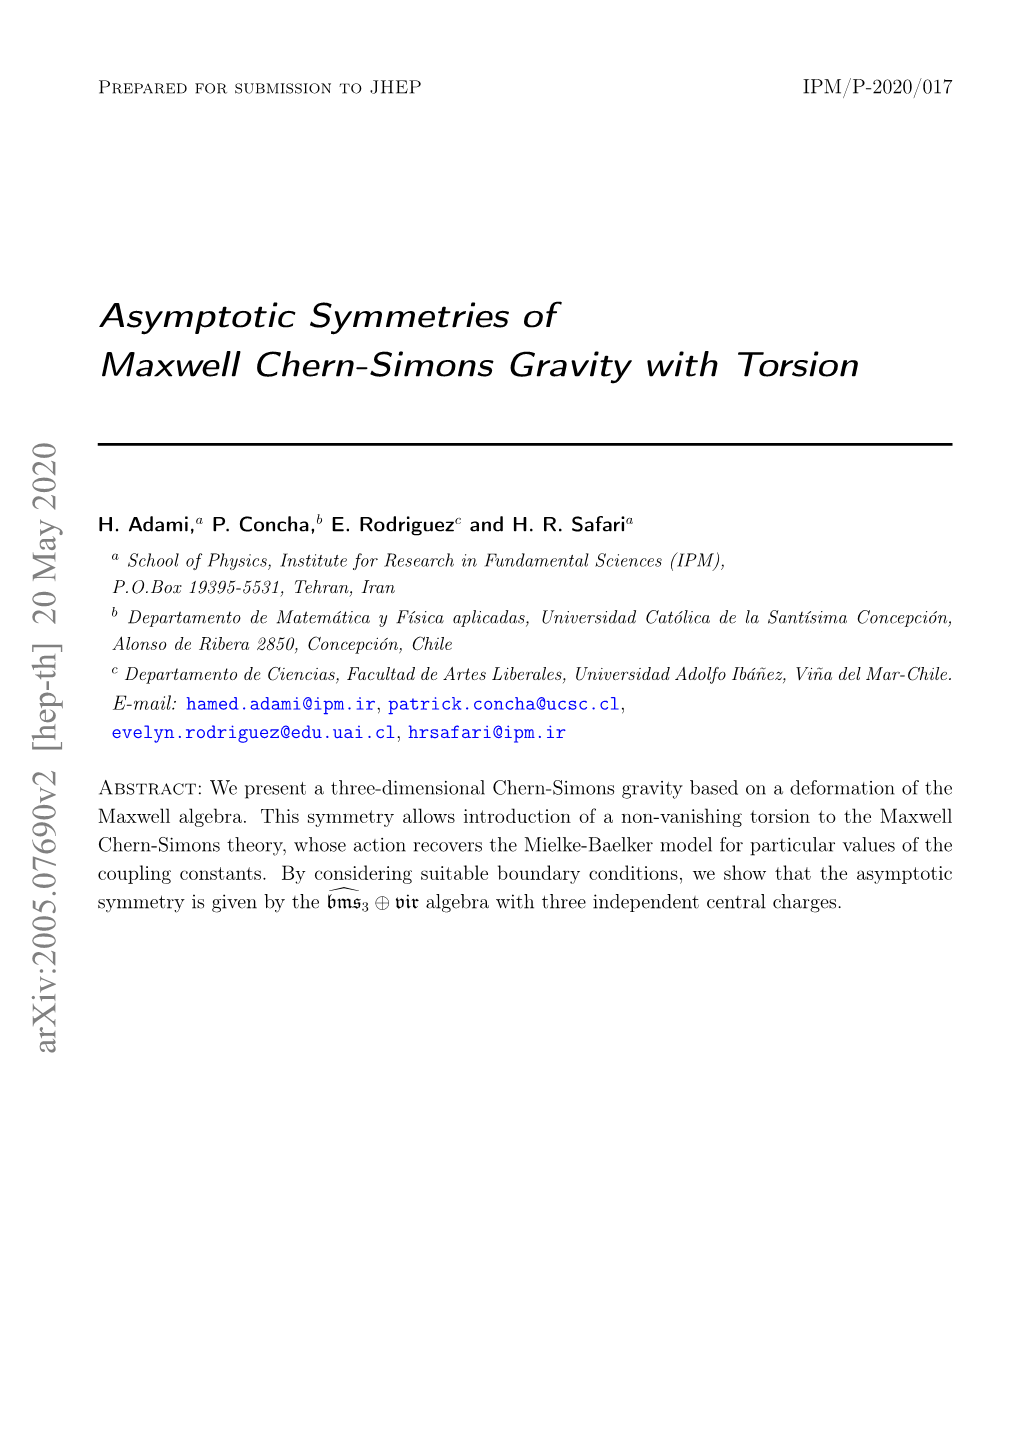 Asymptotic Symmetries of Maxwell Chern-Simons Gravity with Torsion Arxiv:2005.07690V2 [Hep-Th] 20 May 2020